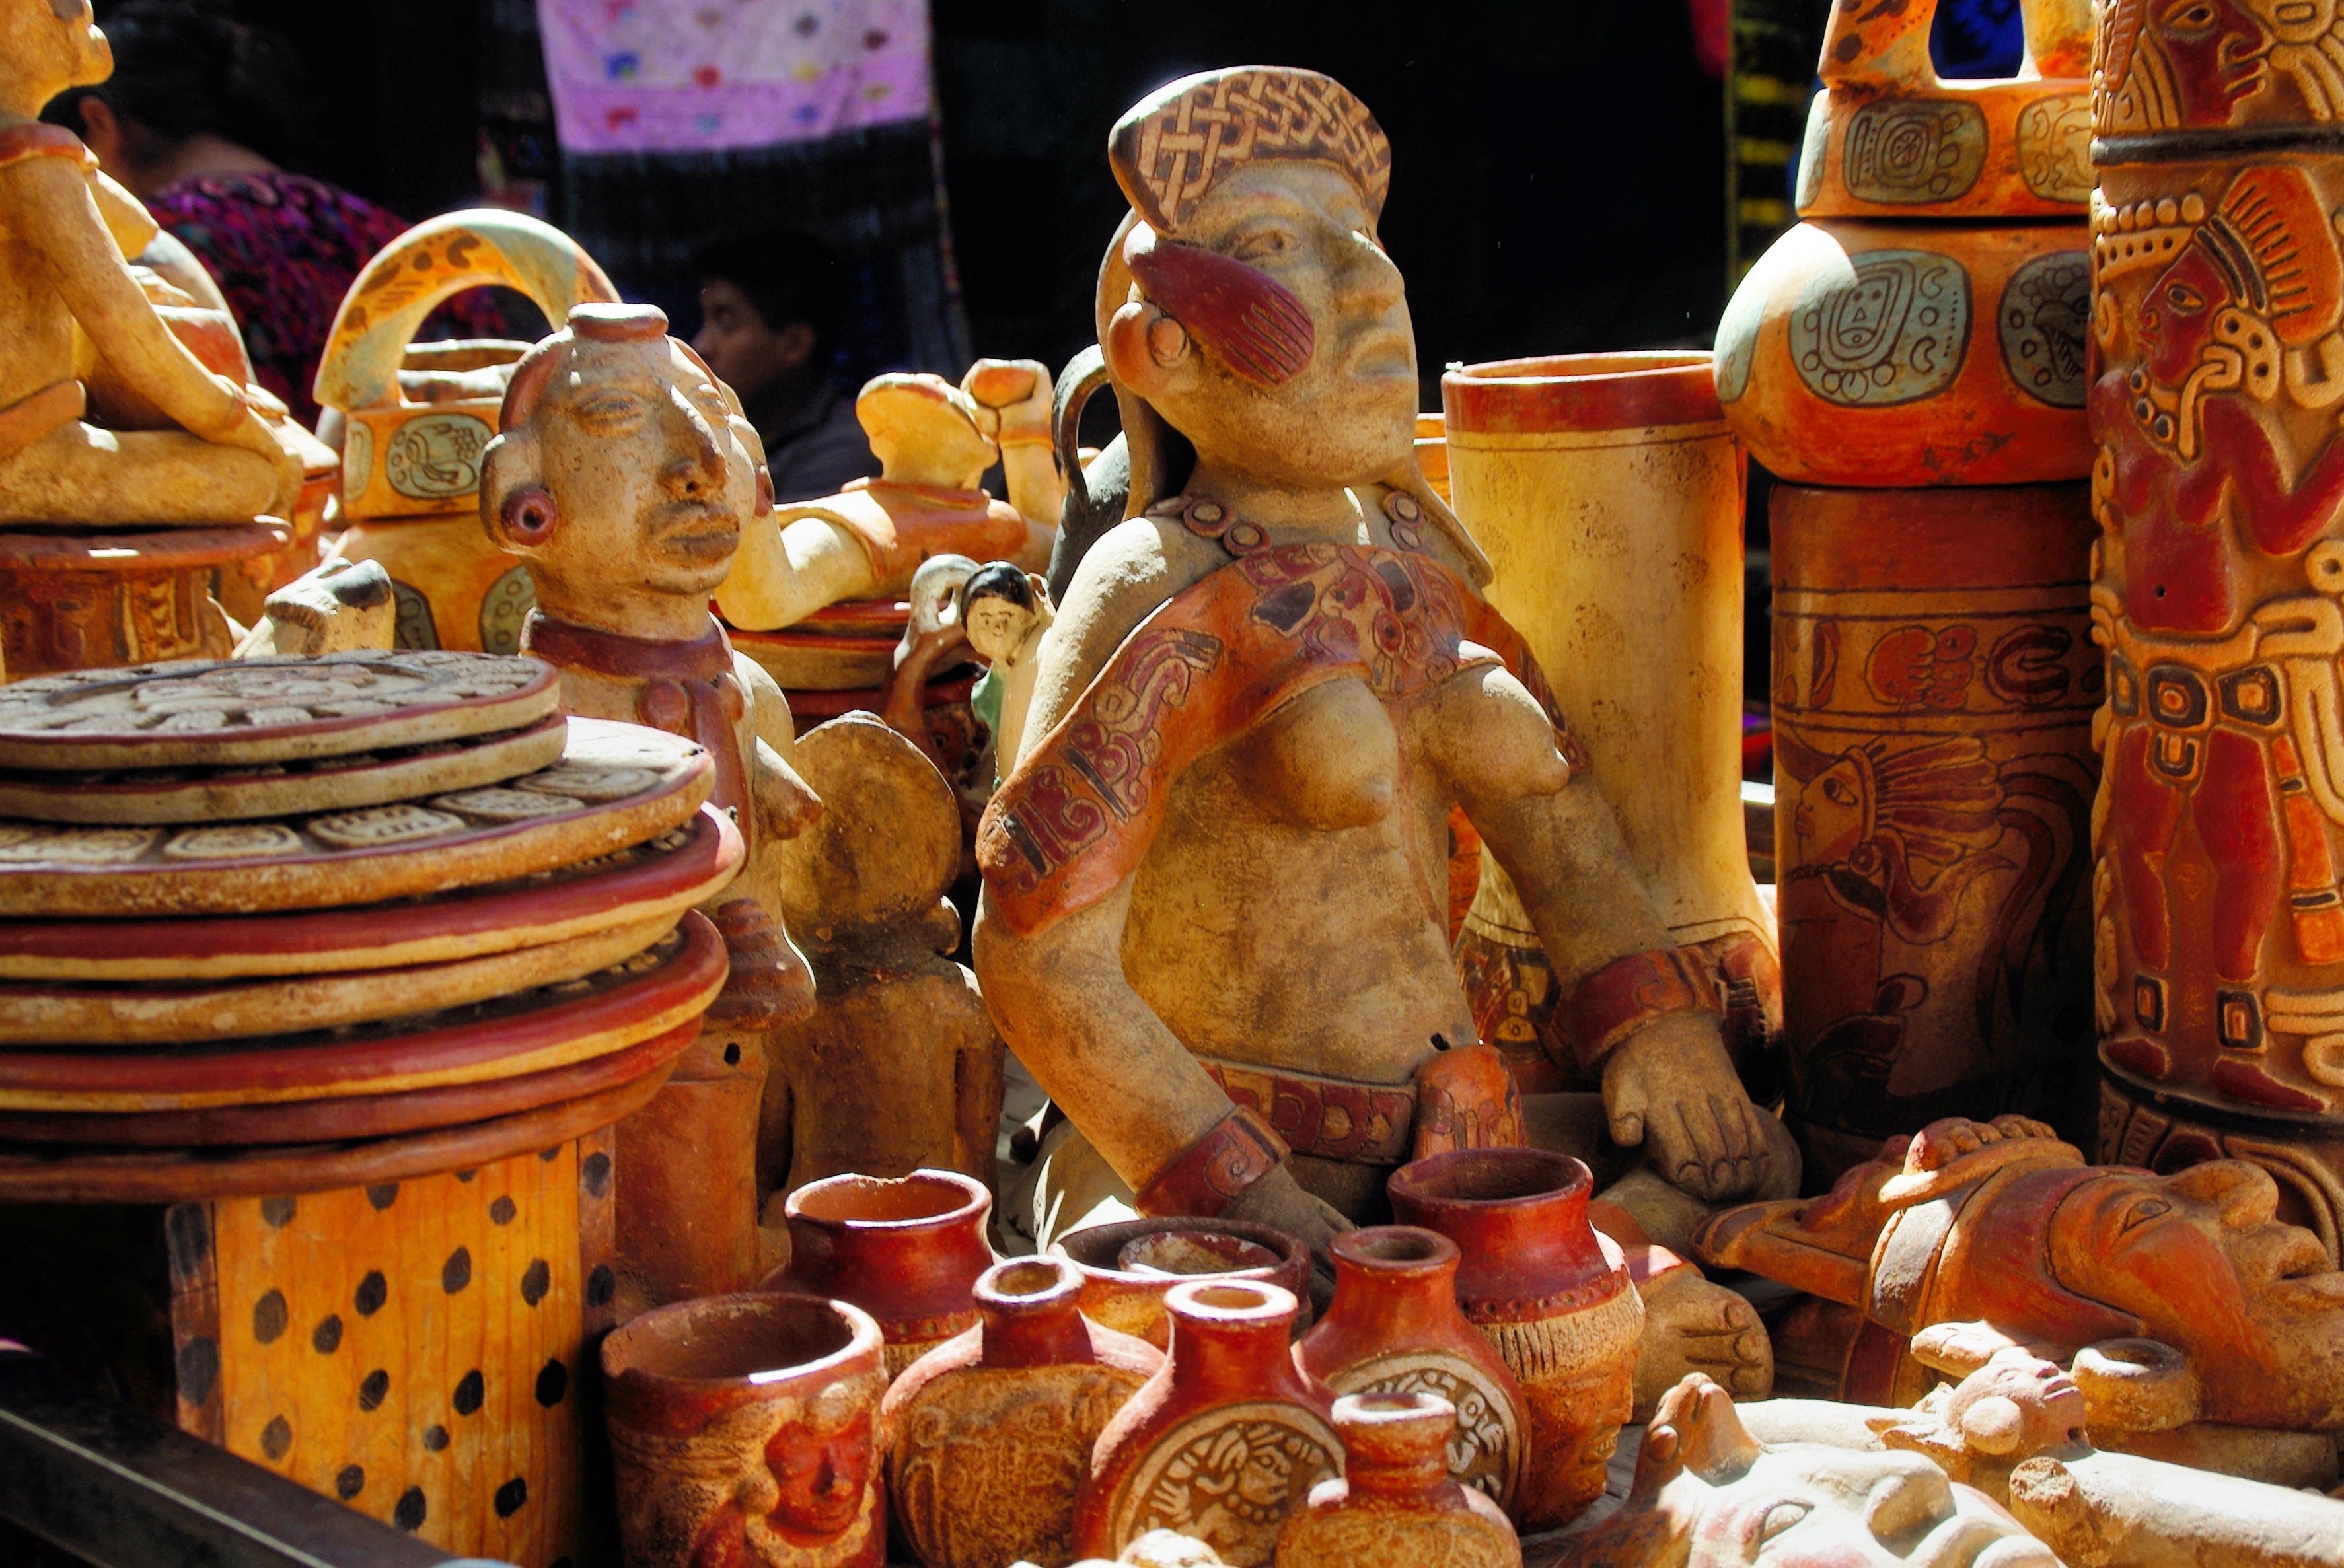 Market, Trinkets, Guatemela, Statues, market, variation